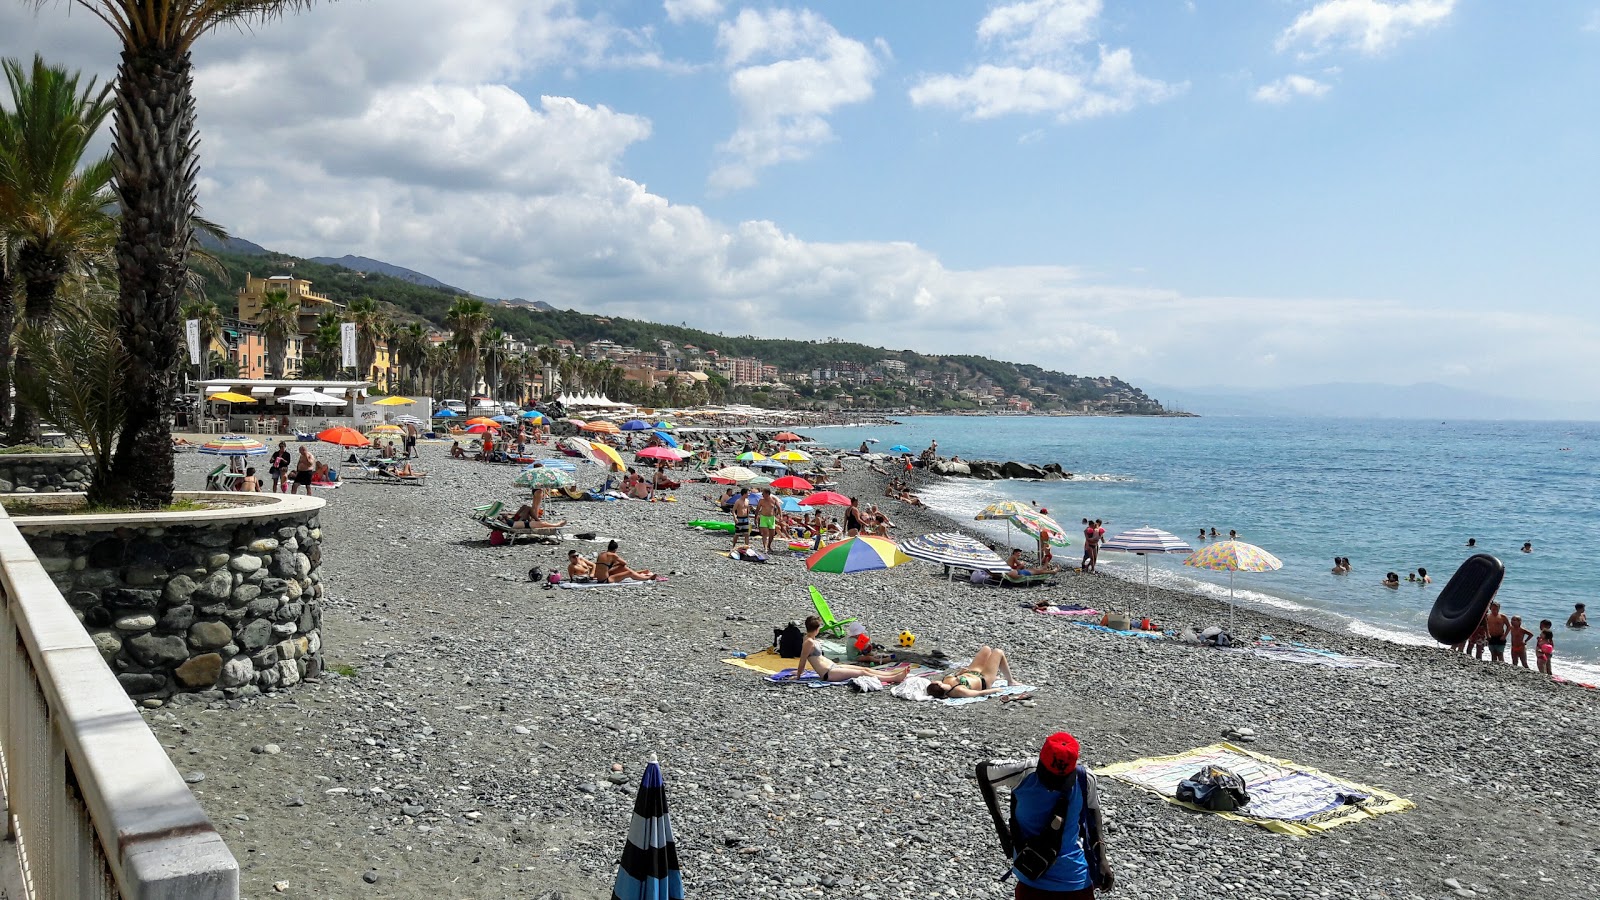 Foto av Spiaggia Cogoleto med medium nivå av renlighet